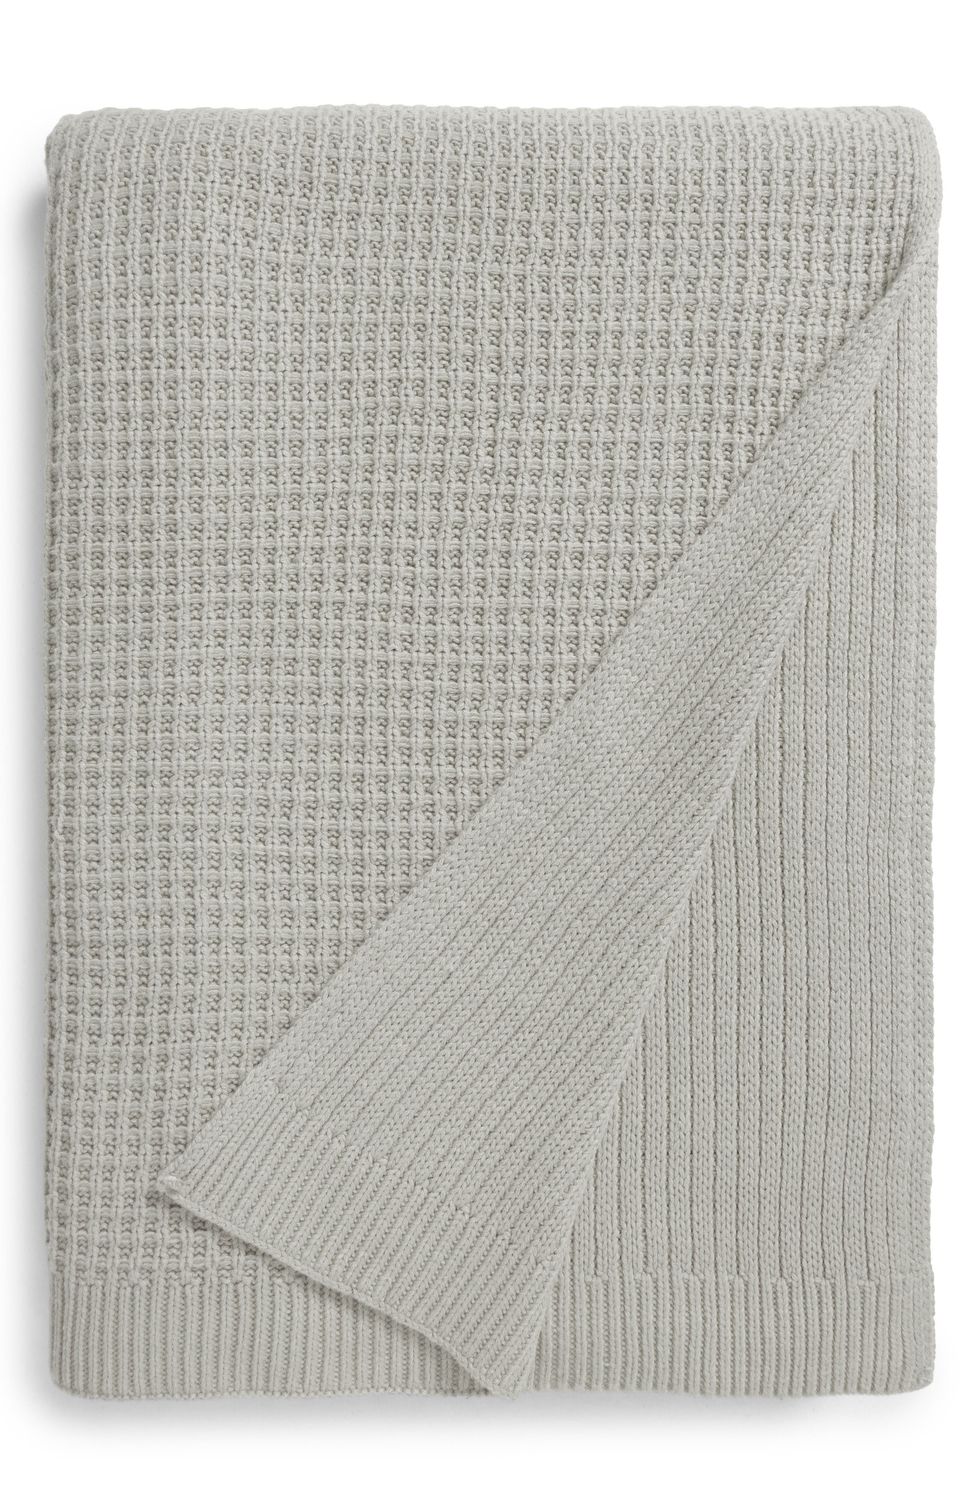 Nordstrom Reversible Knit Blanket